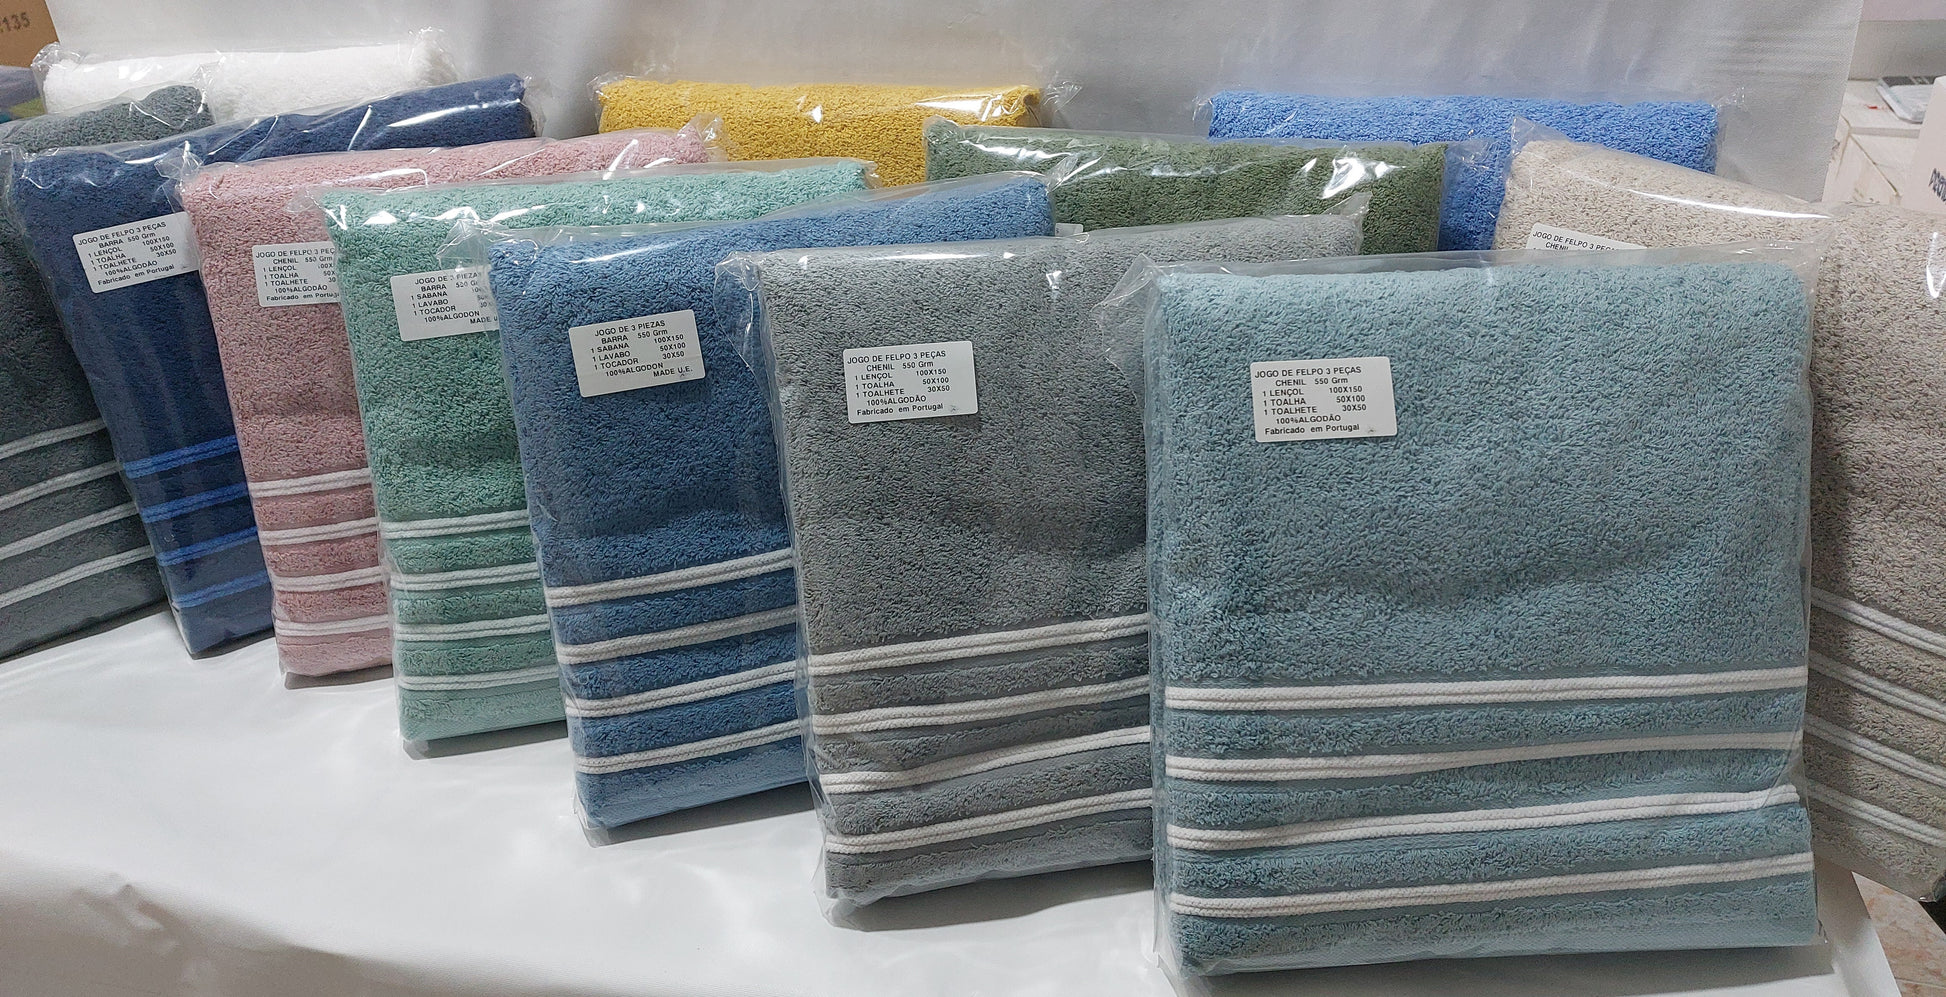  HLDETH Juego de toallas de baño de algodón gris para hombre,  toalla de baño, suministros de baño (color gris, tamaño : Hogar y Cocina